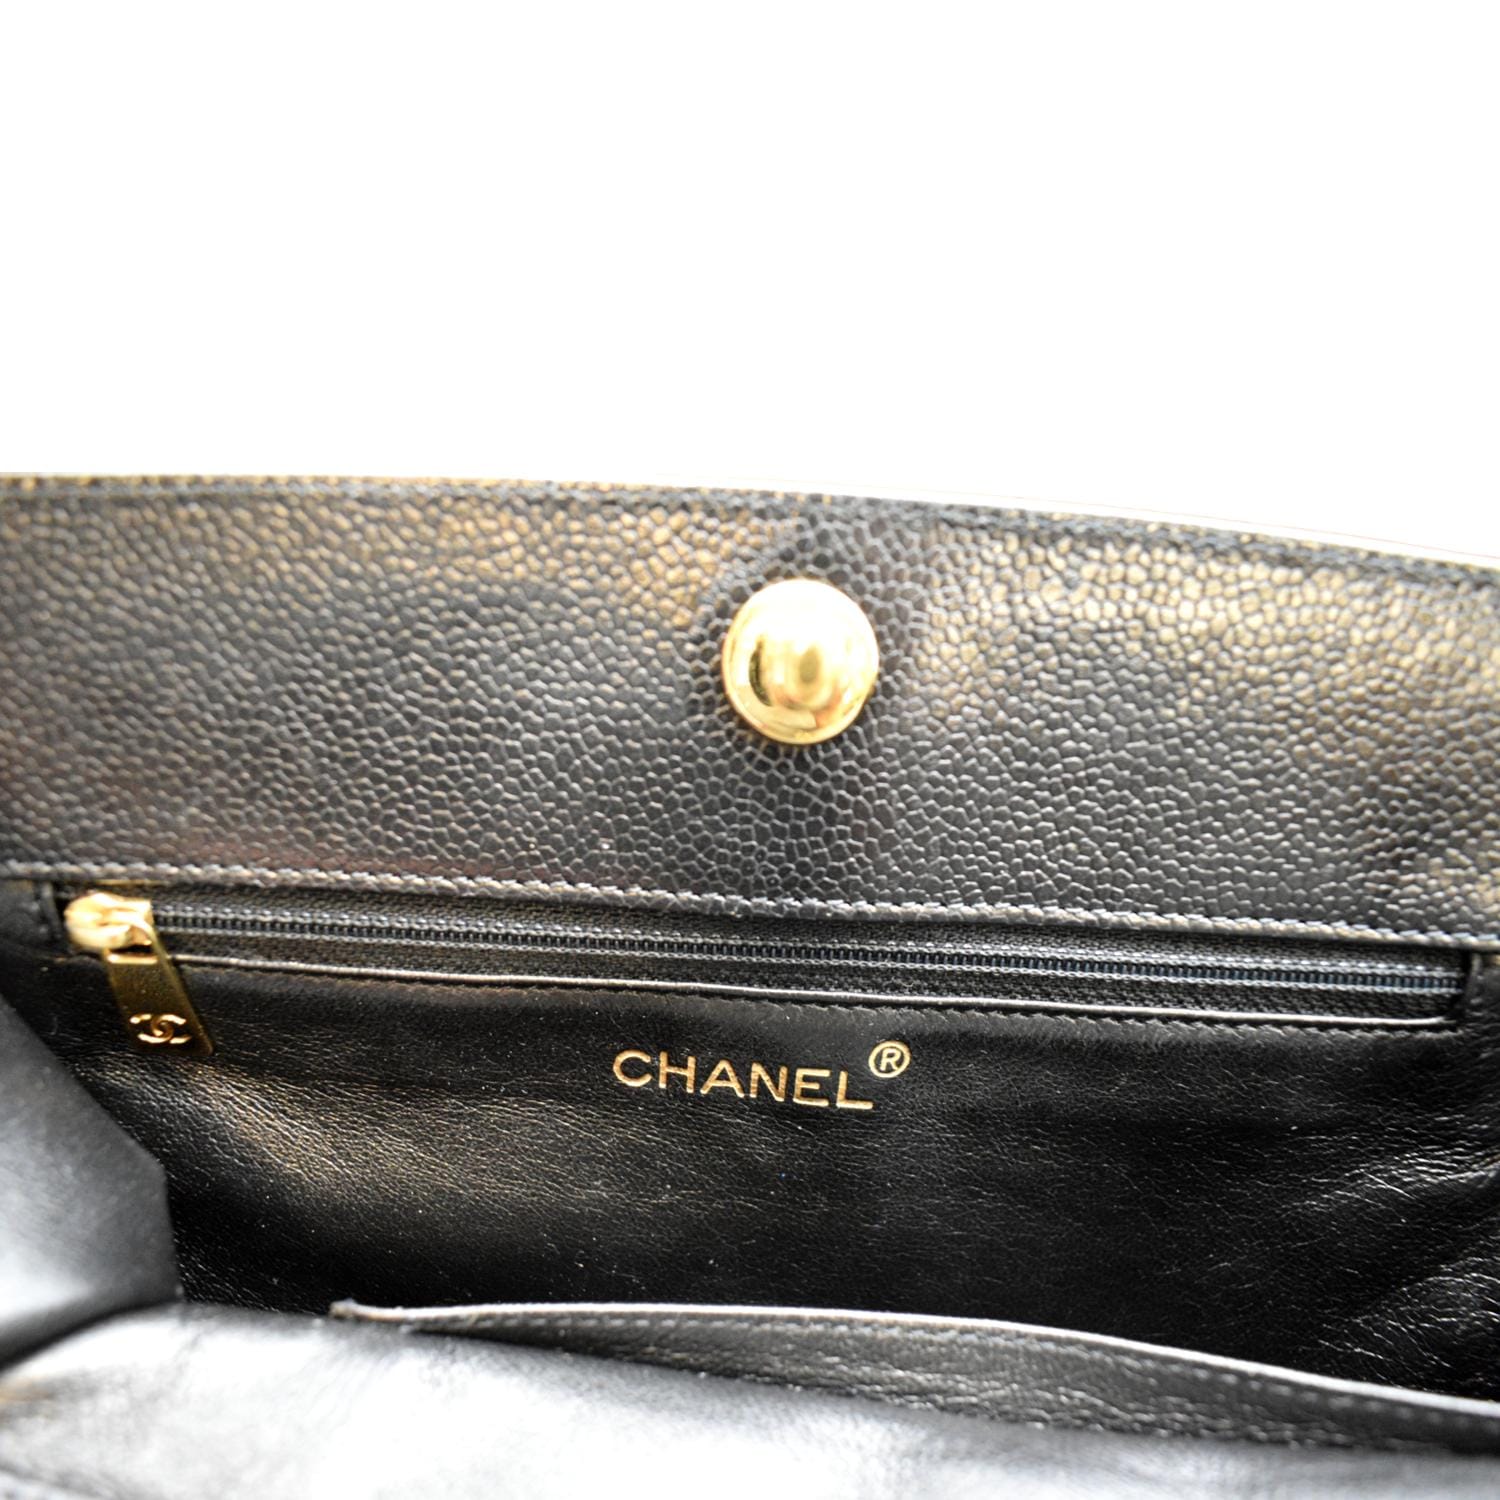 Chanel CC Logo Vintage Leather Tote Handbag